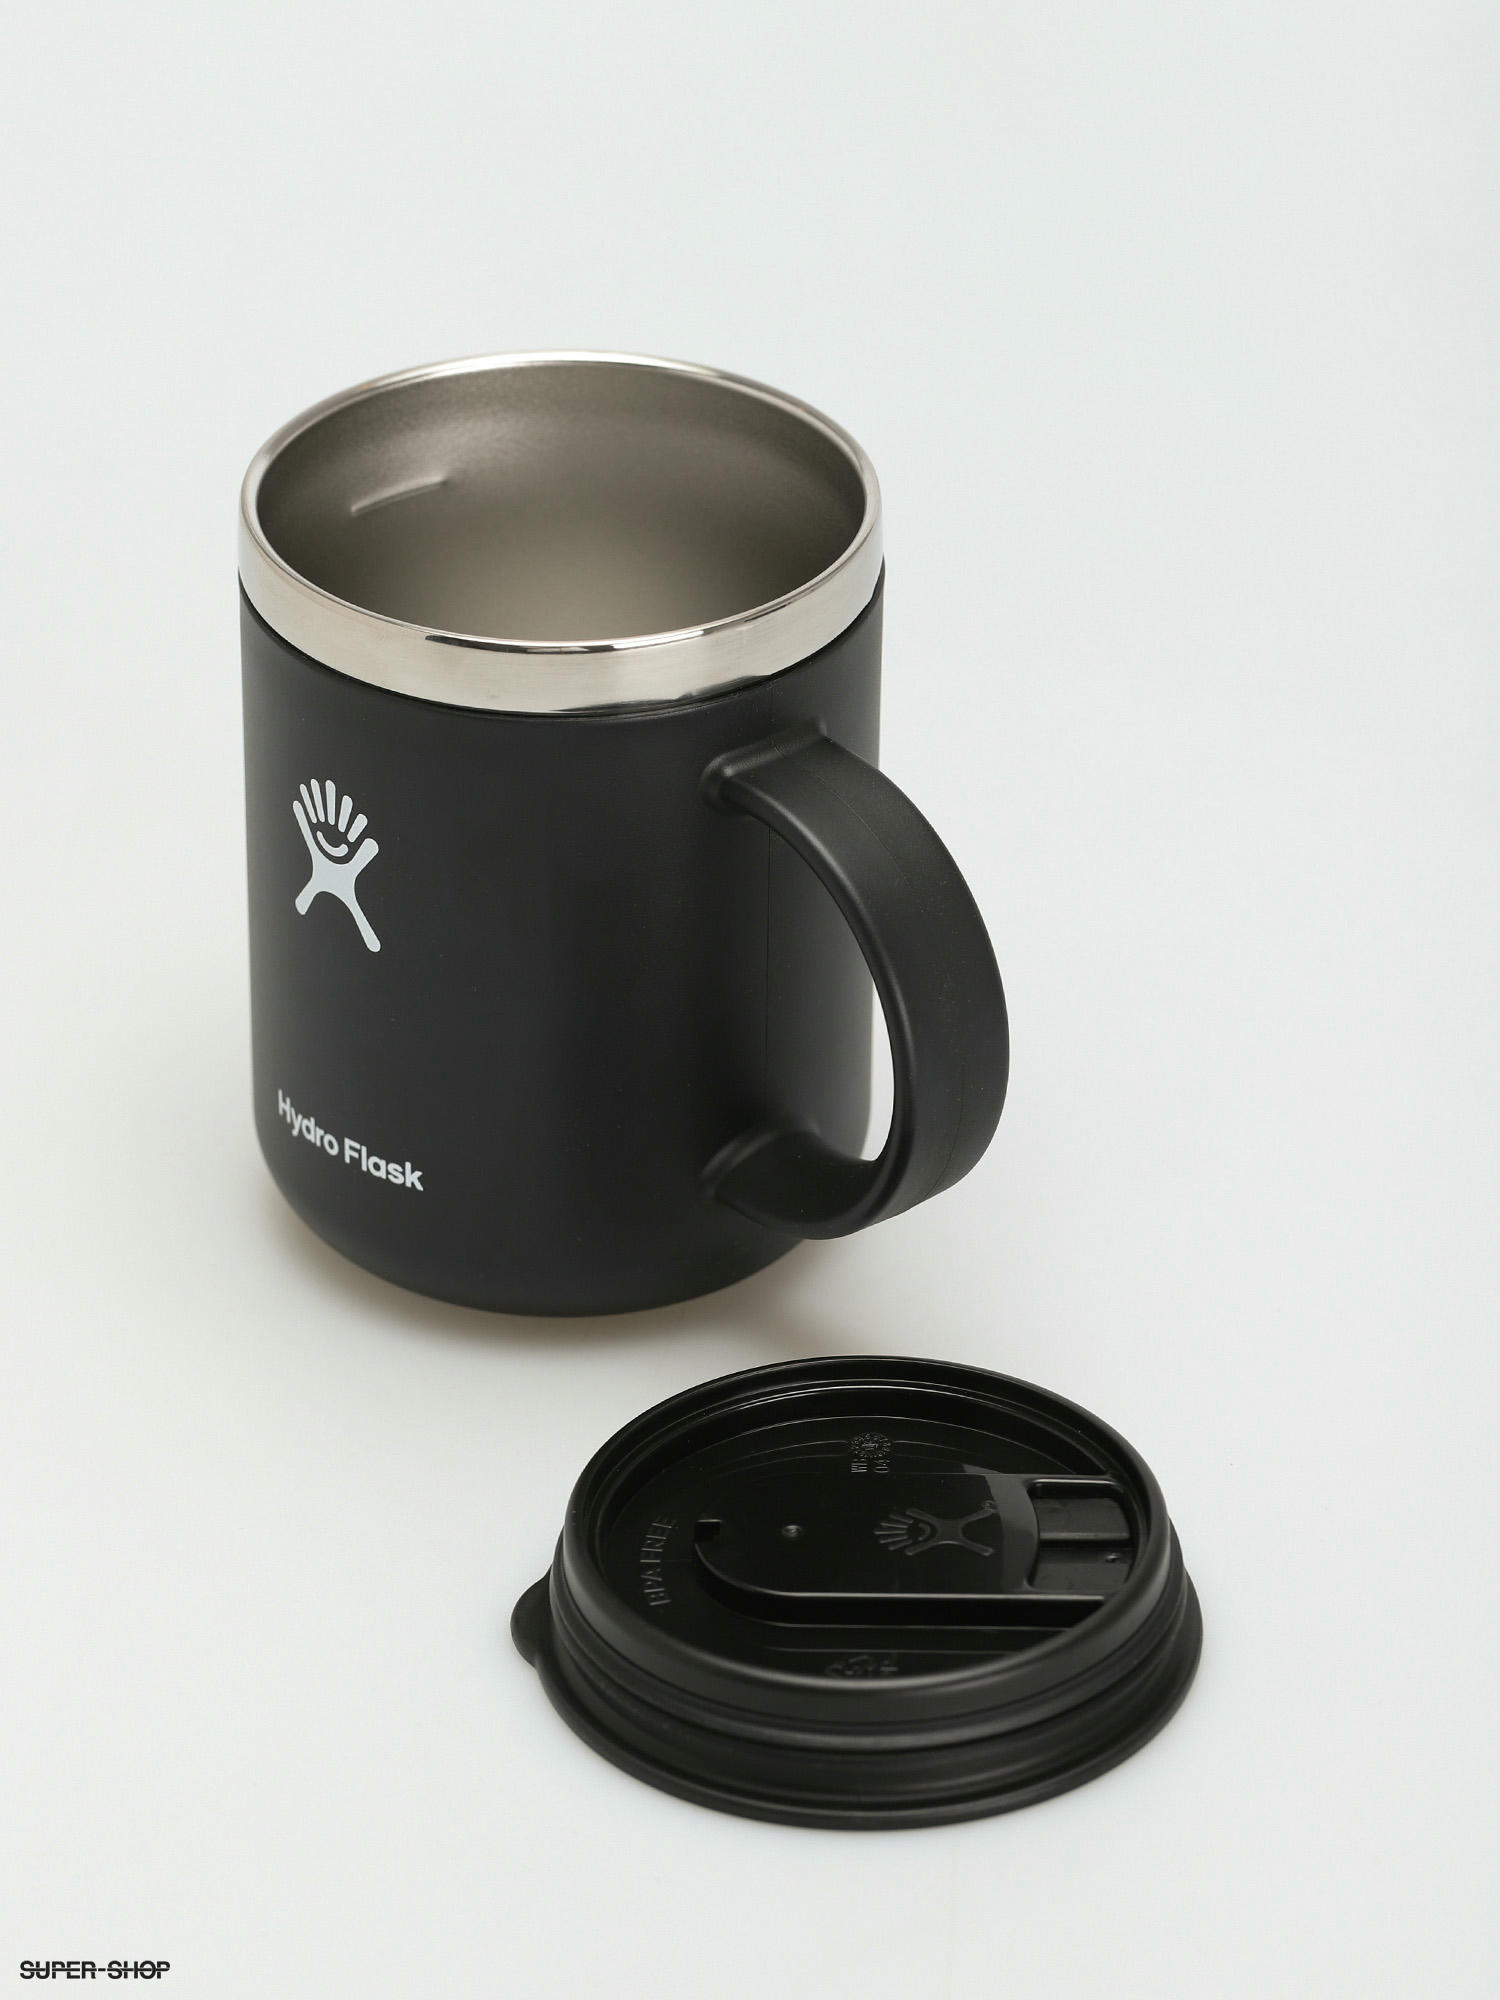 https://static.super-shop.com/1295043-hydro-flask-coffee-mug-354ml-cup-black.jpg?w=1920